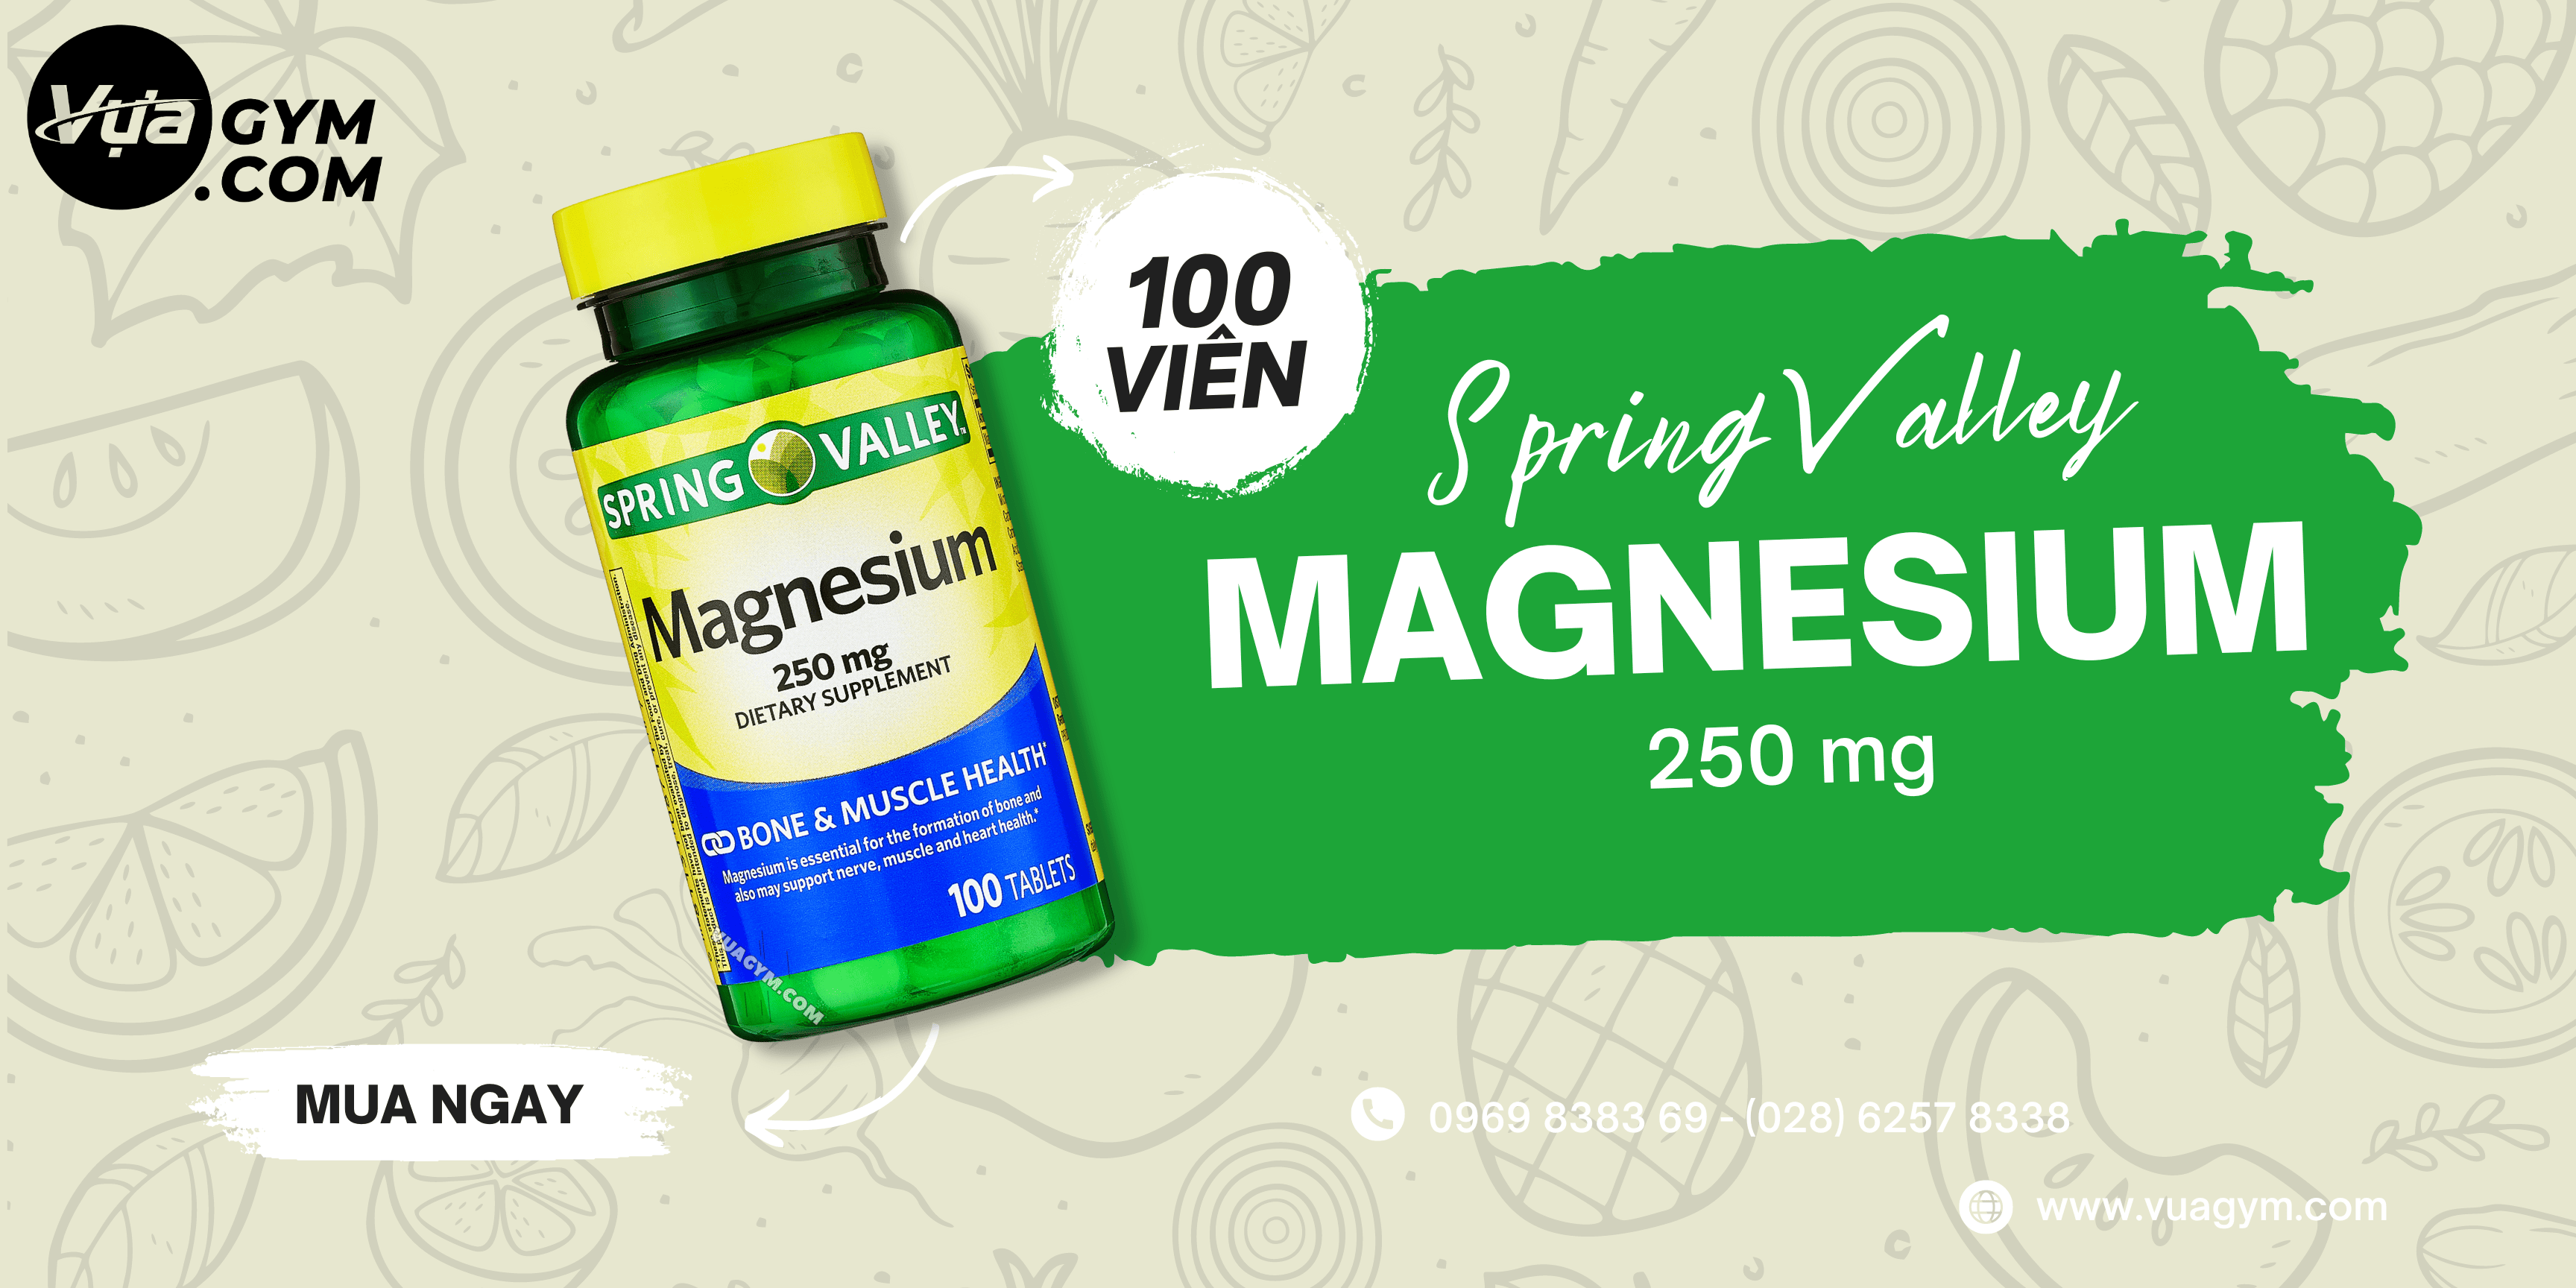 Spring Valley - Magnesium 250mg (100 viên) - spring valley magnesium 250mg 100 vien motavuagym